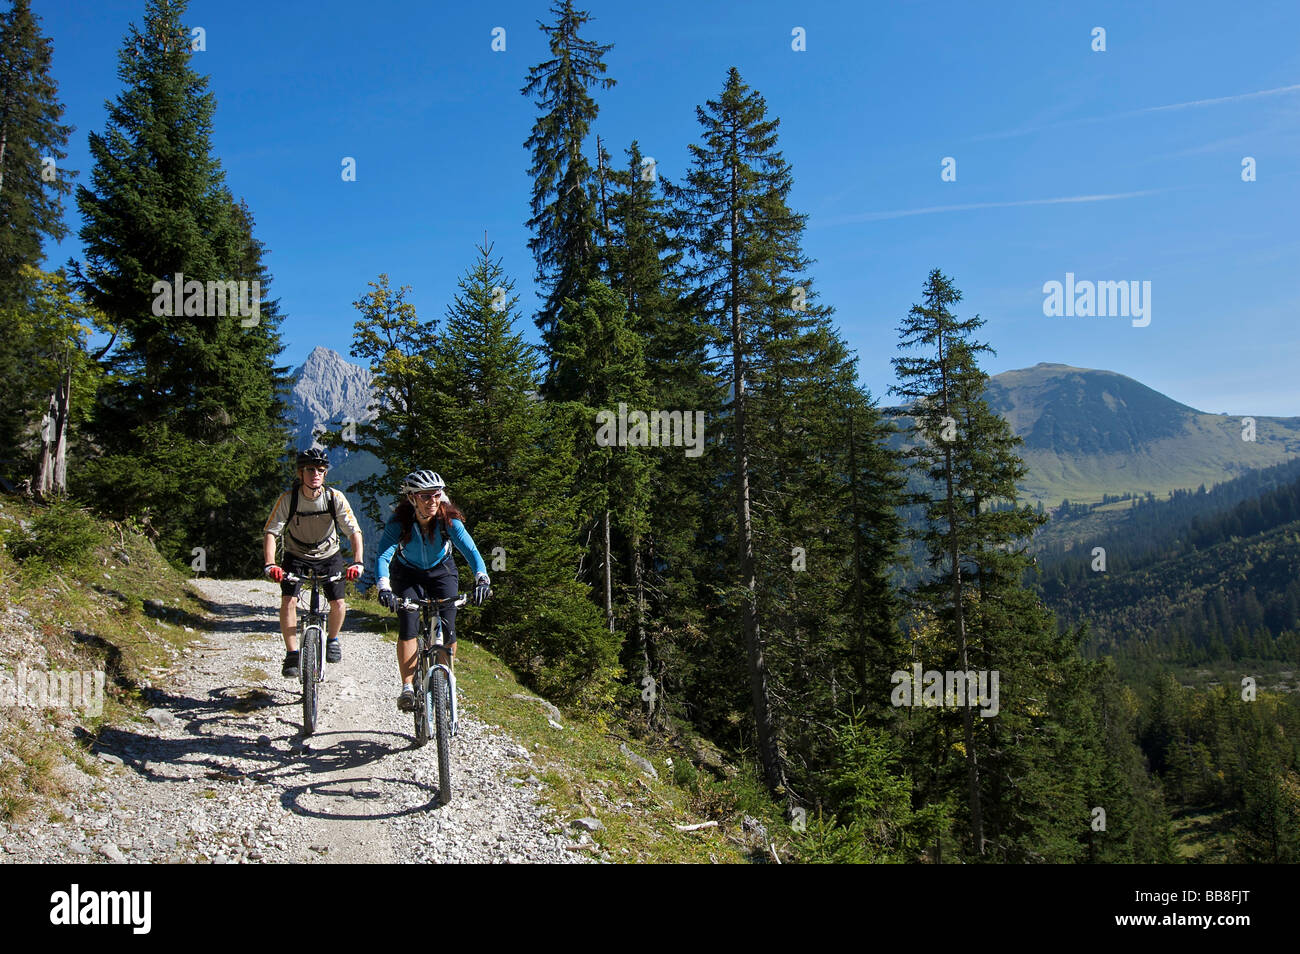 Mountainbike riders, maschio e femmina tra Karwendelhaus, alpine club house e Kleiner Ahornboden distretto forestale, Hinterri Foto Stock